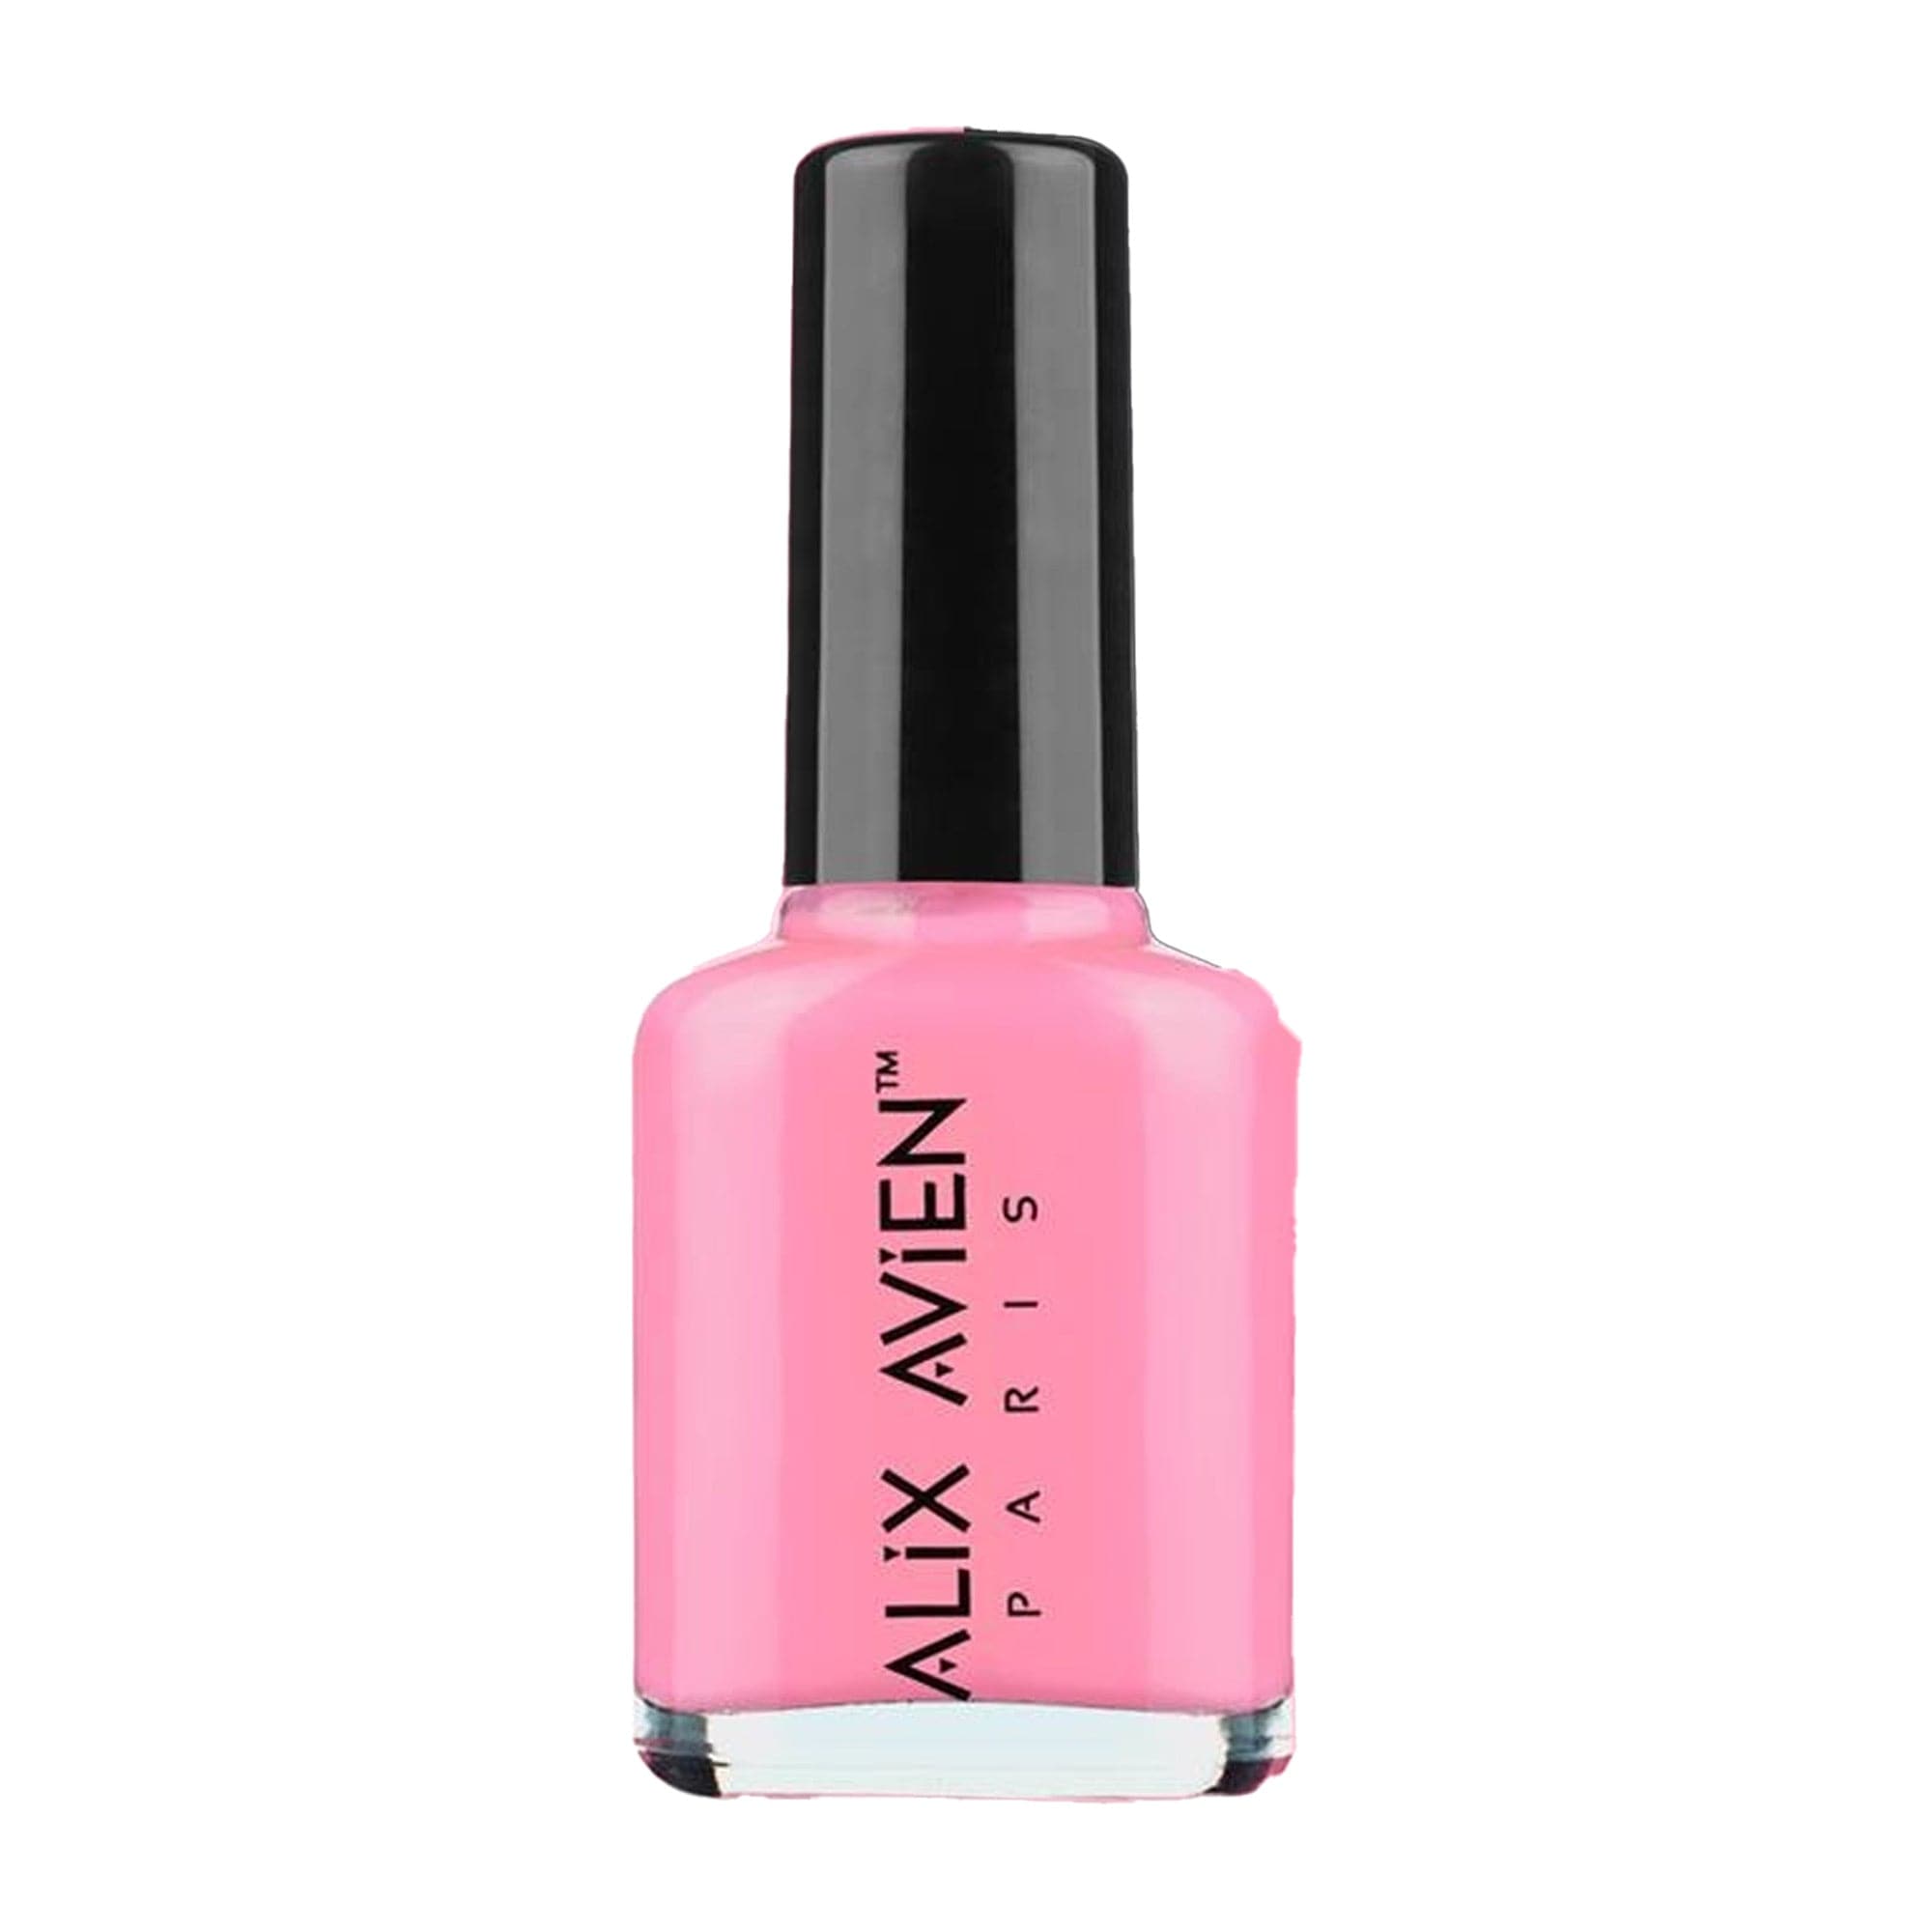 Alix Avien - Nail Polish No.60 (Bubblegum Pink) - Eson Direct